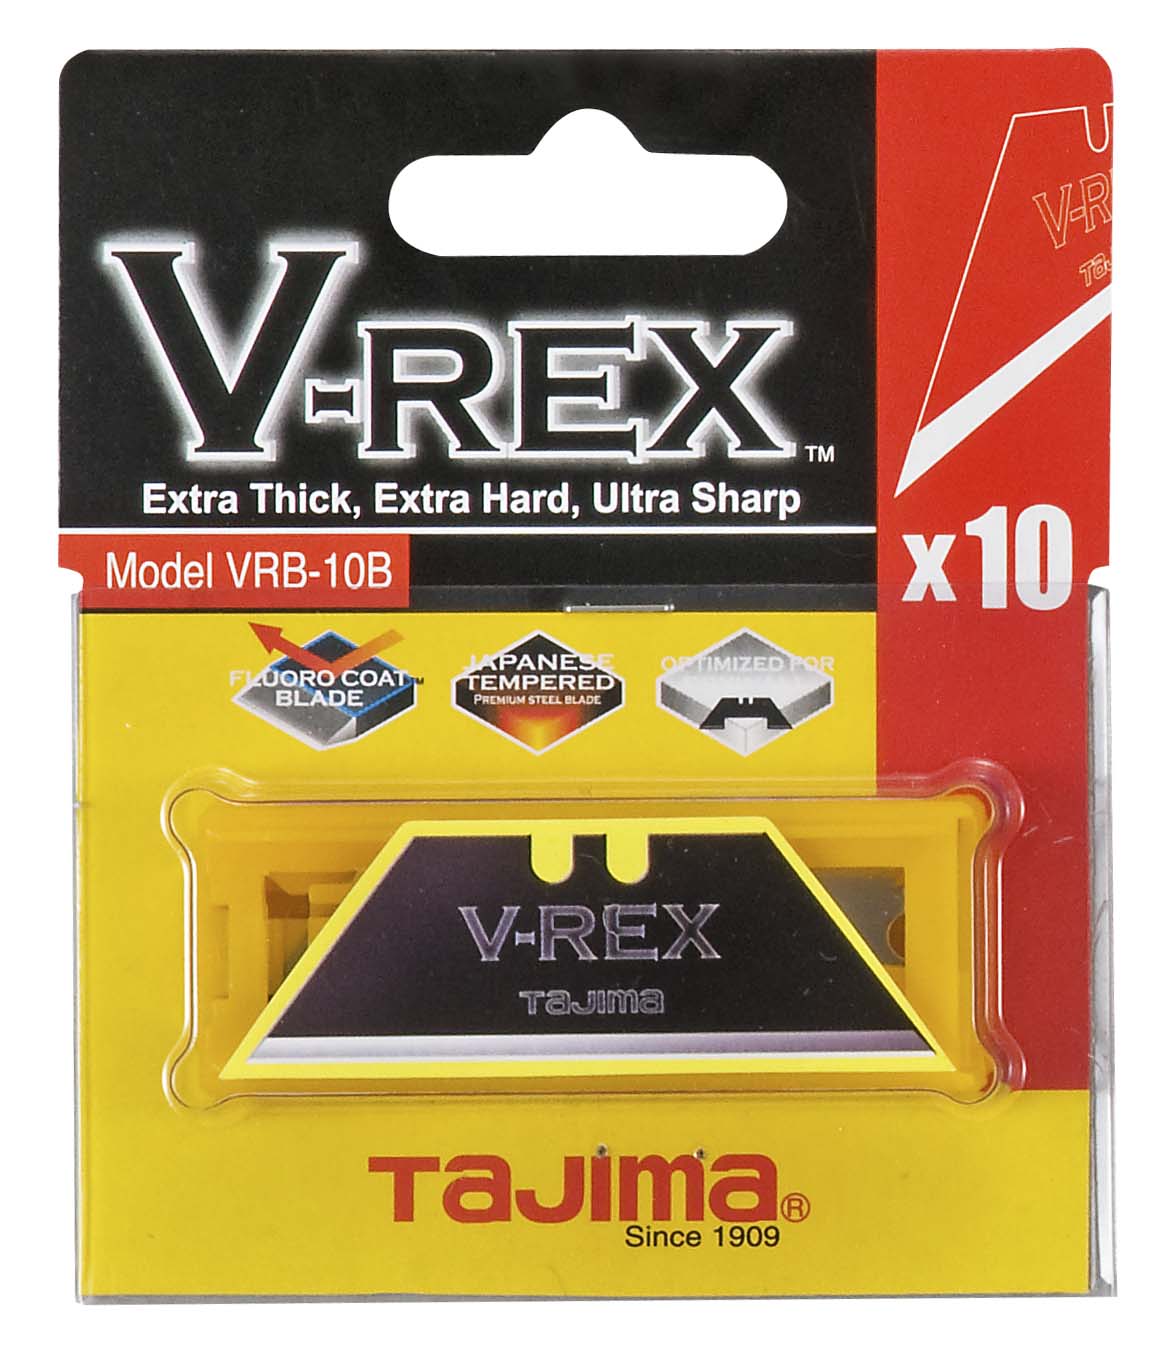 Tajima V-Rex Trapezklingen Box mit 10 Klingen- 1 Stk.